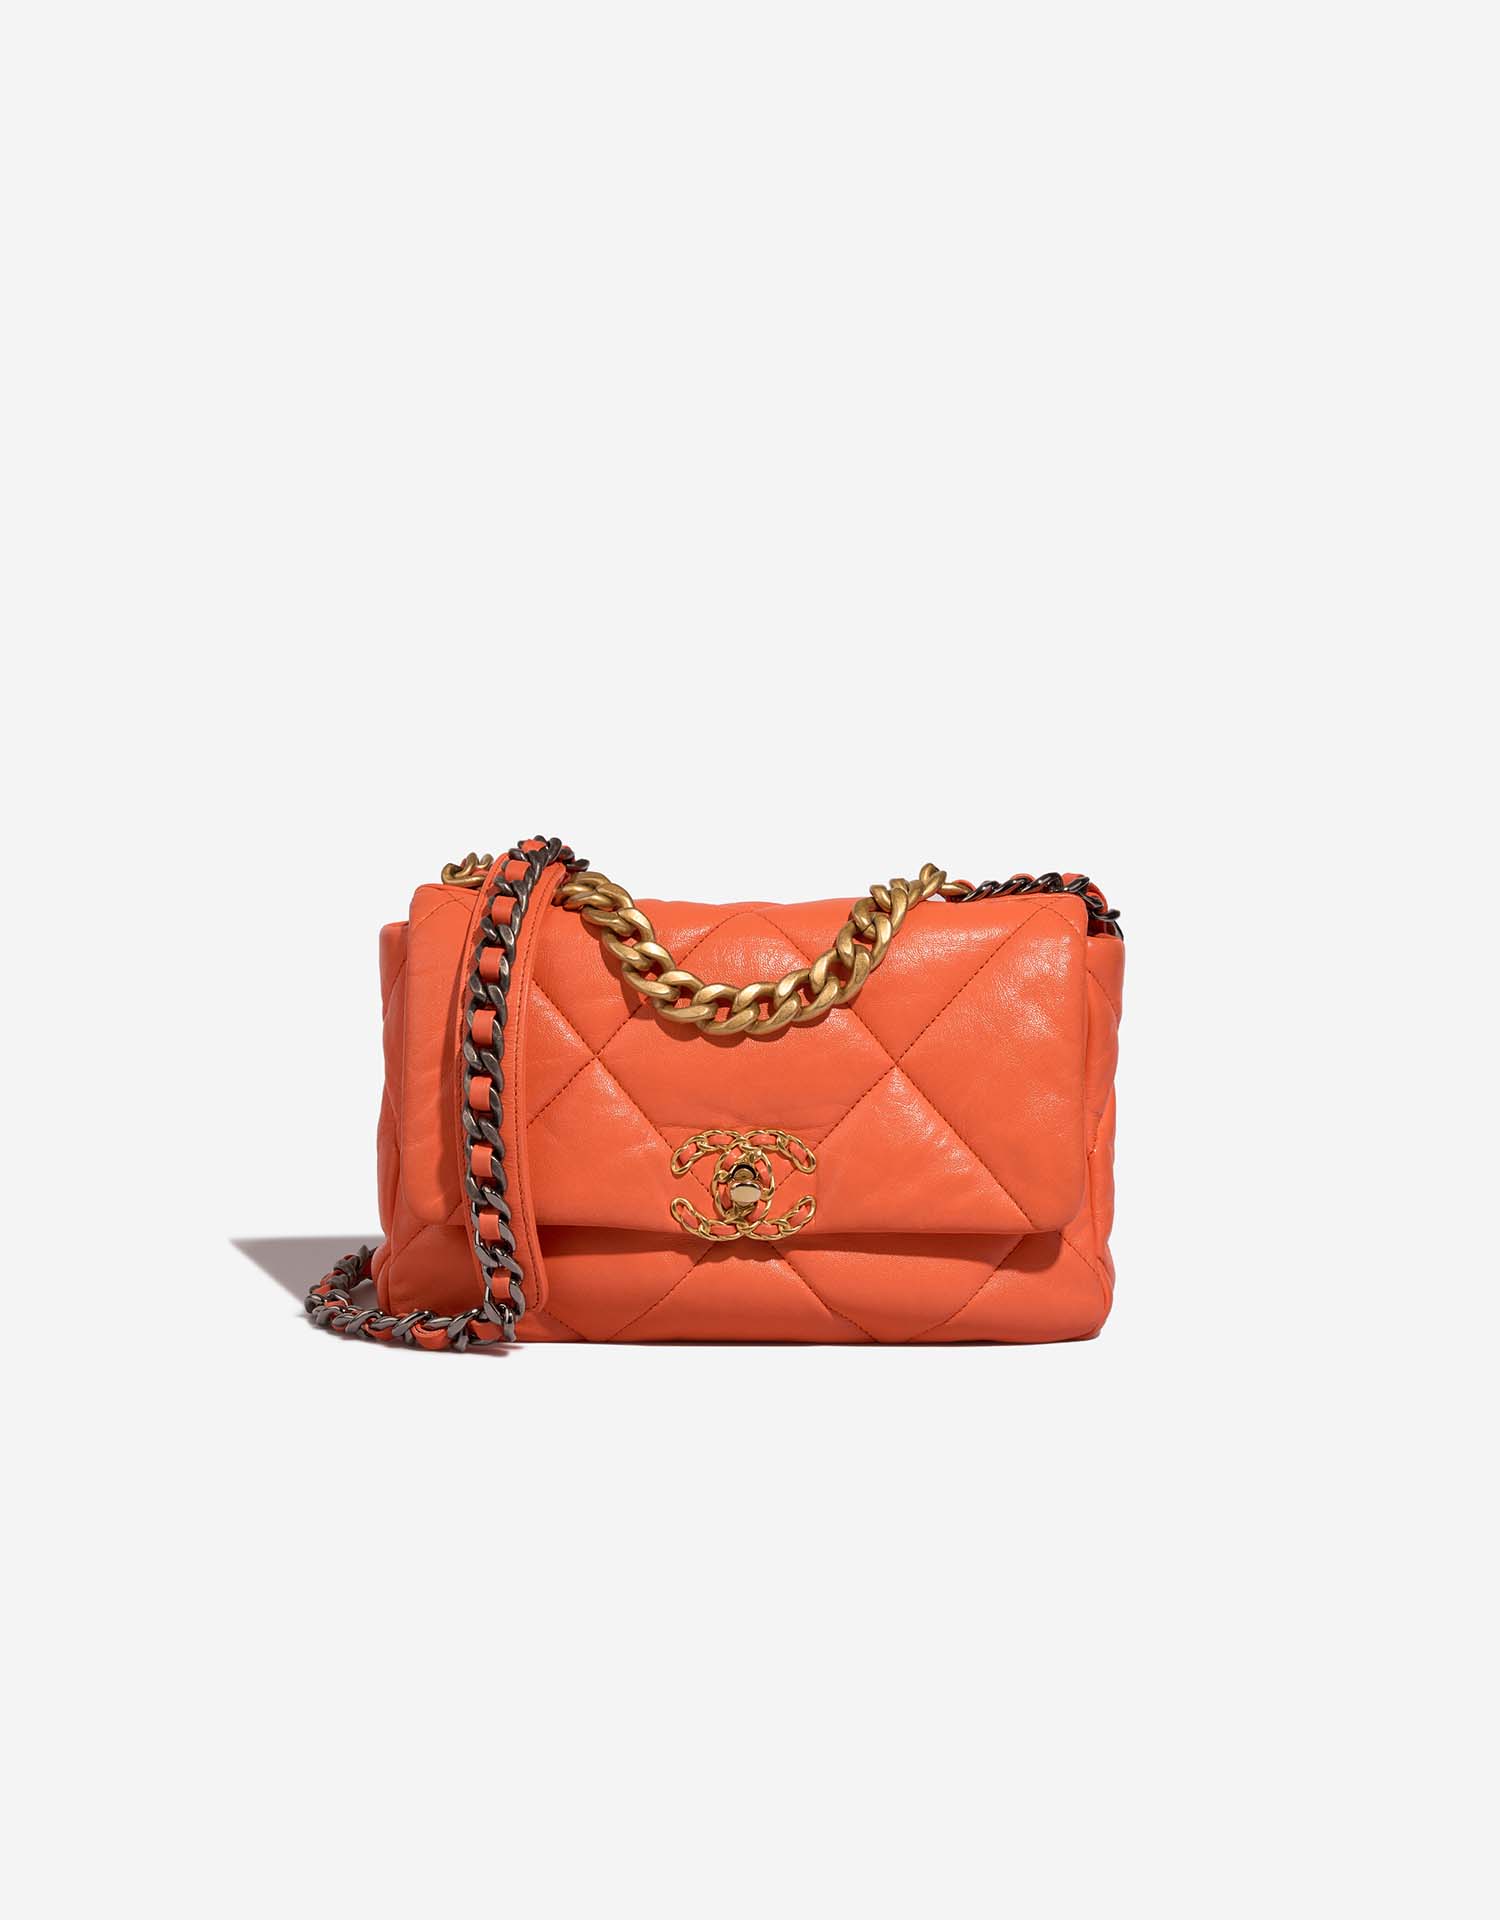 Chanel 19 Flap Bag Lamb Orange | SACLÀB